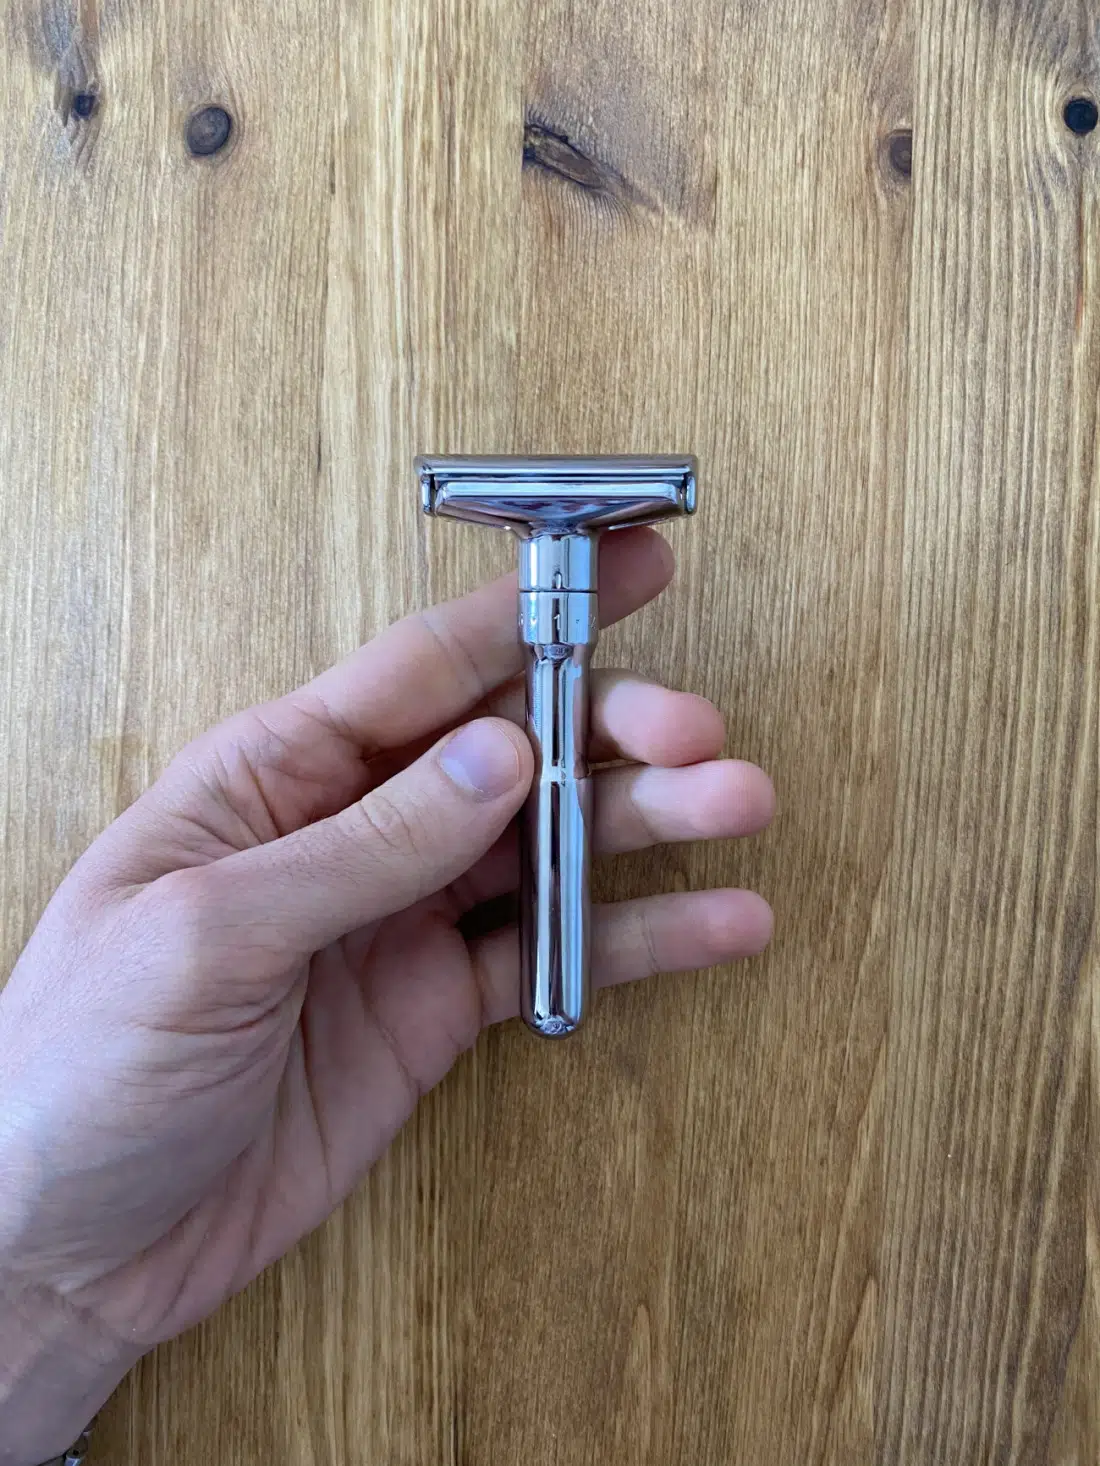 Merkur FUTUR adjustable safety razor